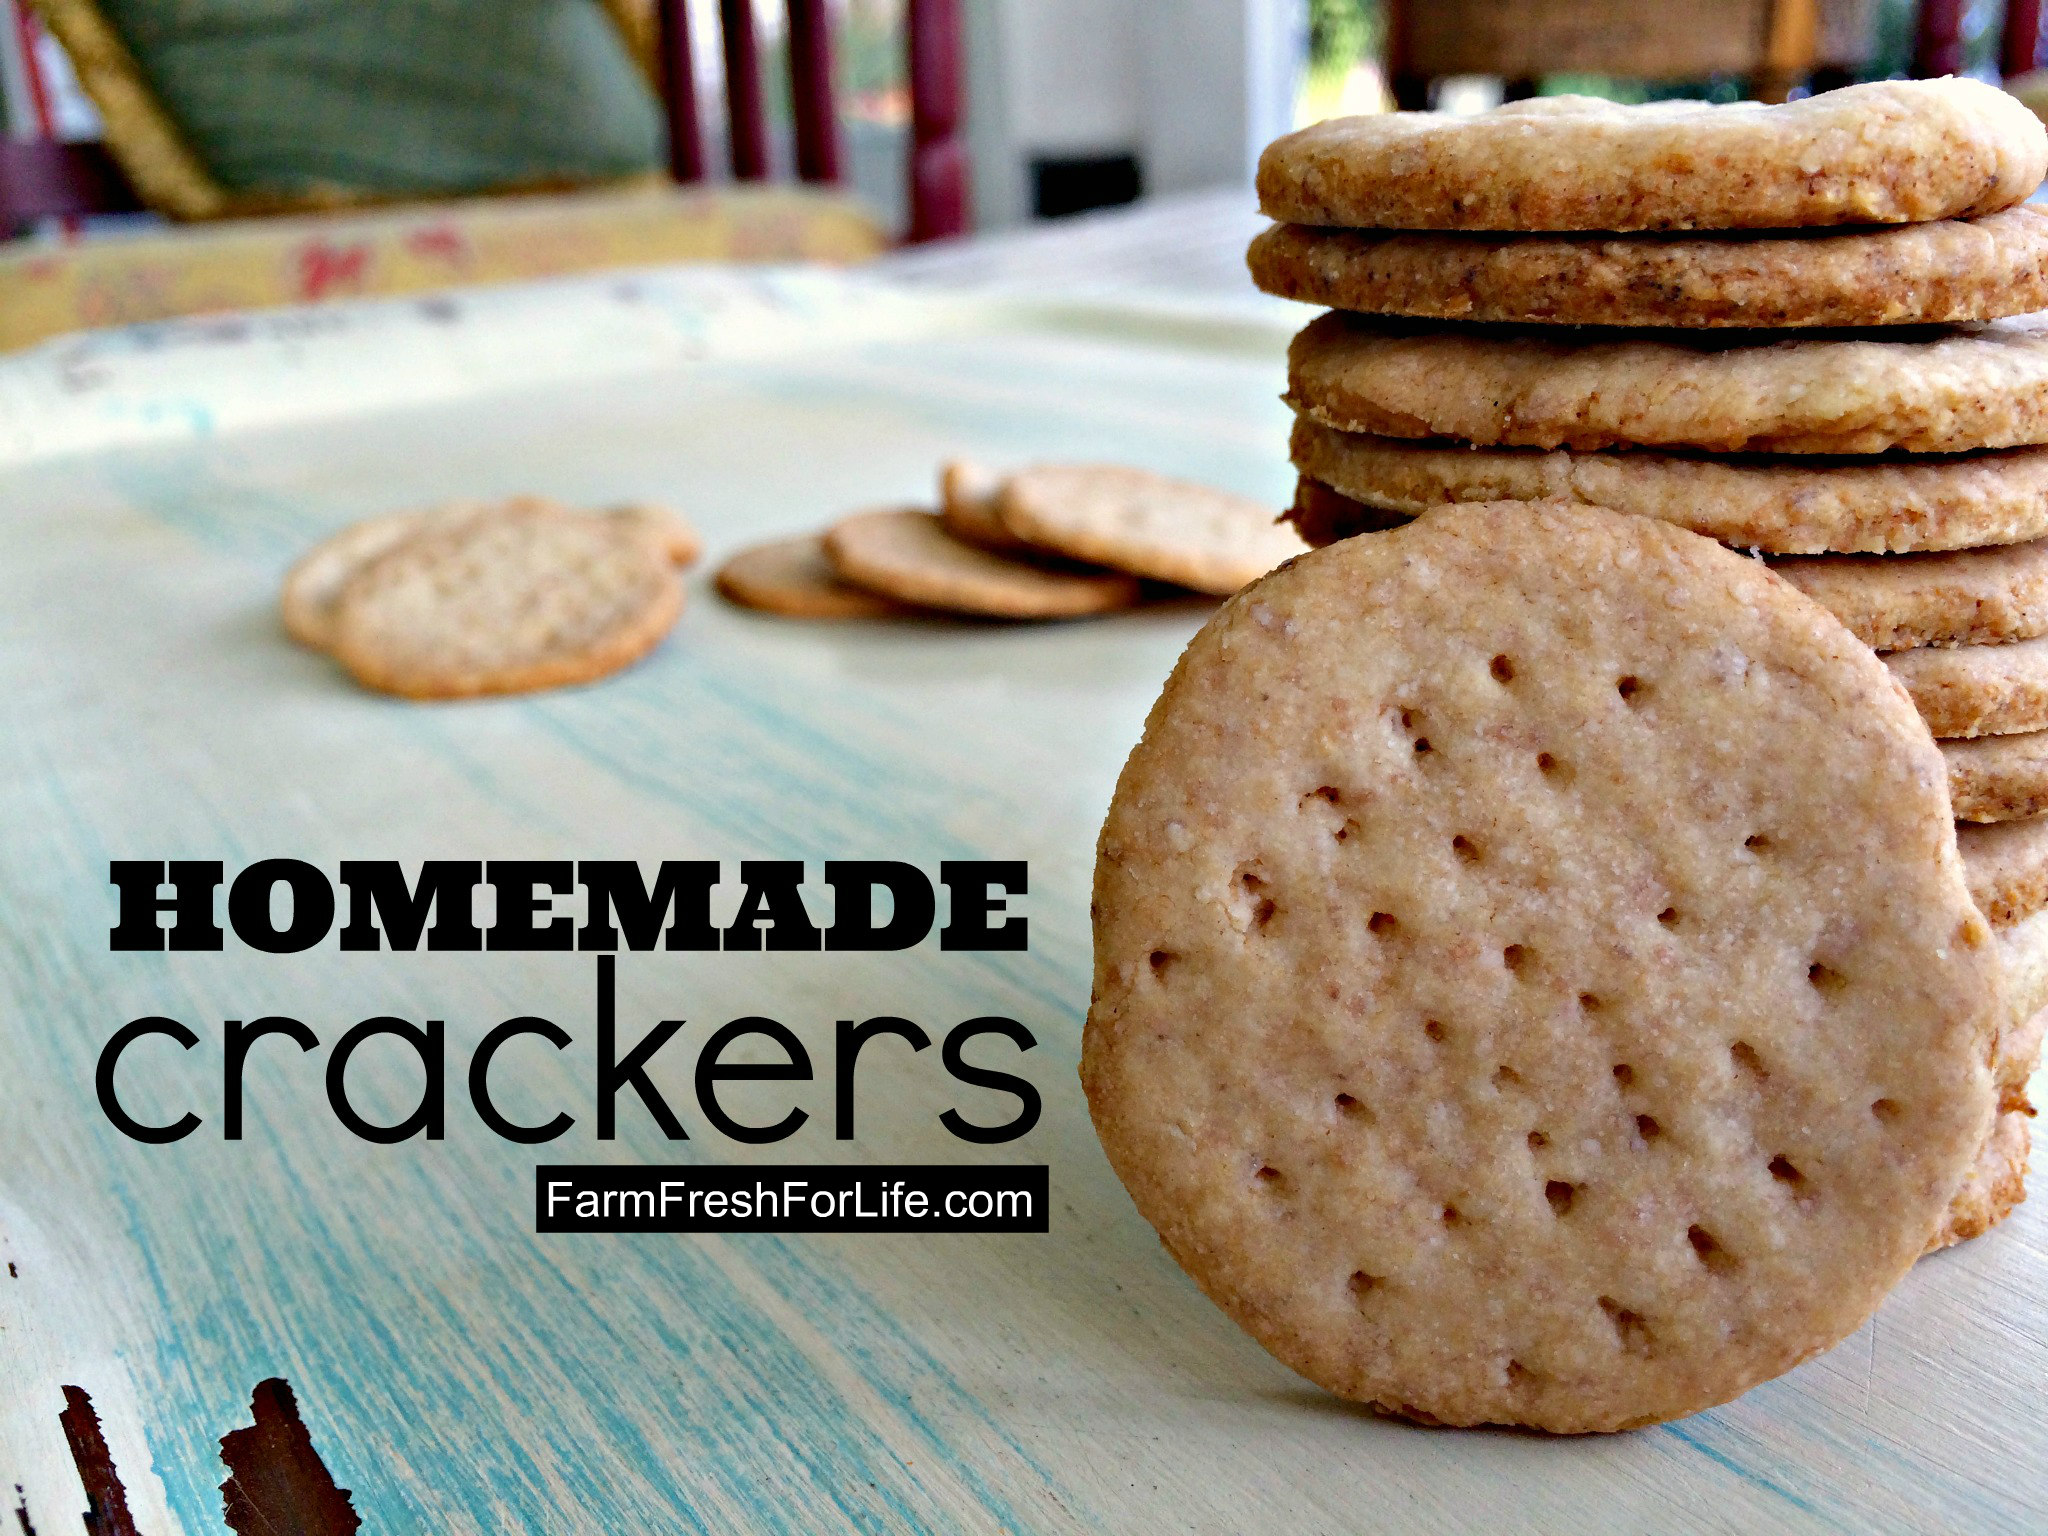 Homemade Cracker Recipe Farm Fresh For Life Real Food For Health